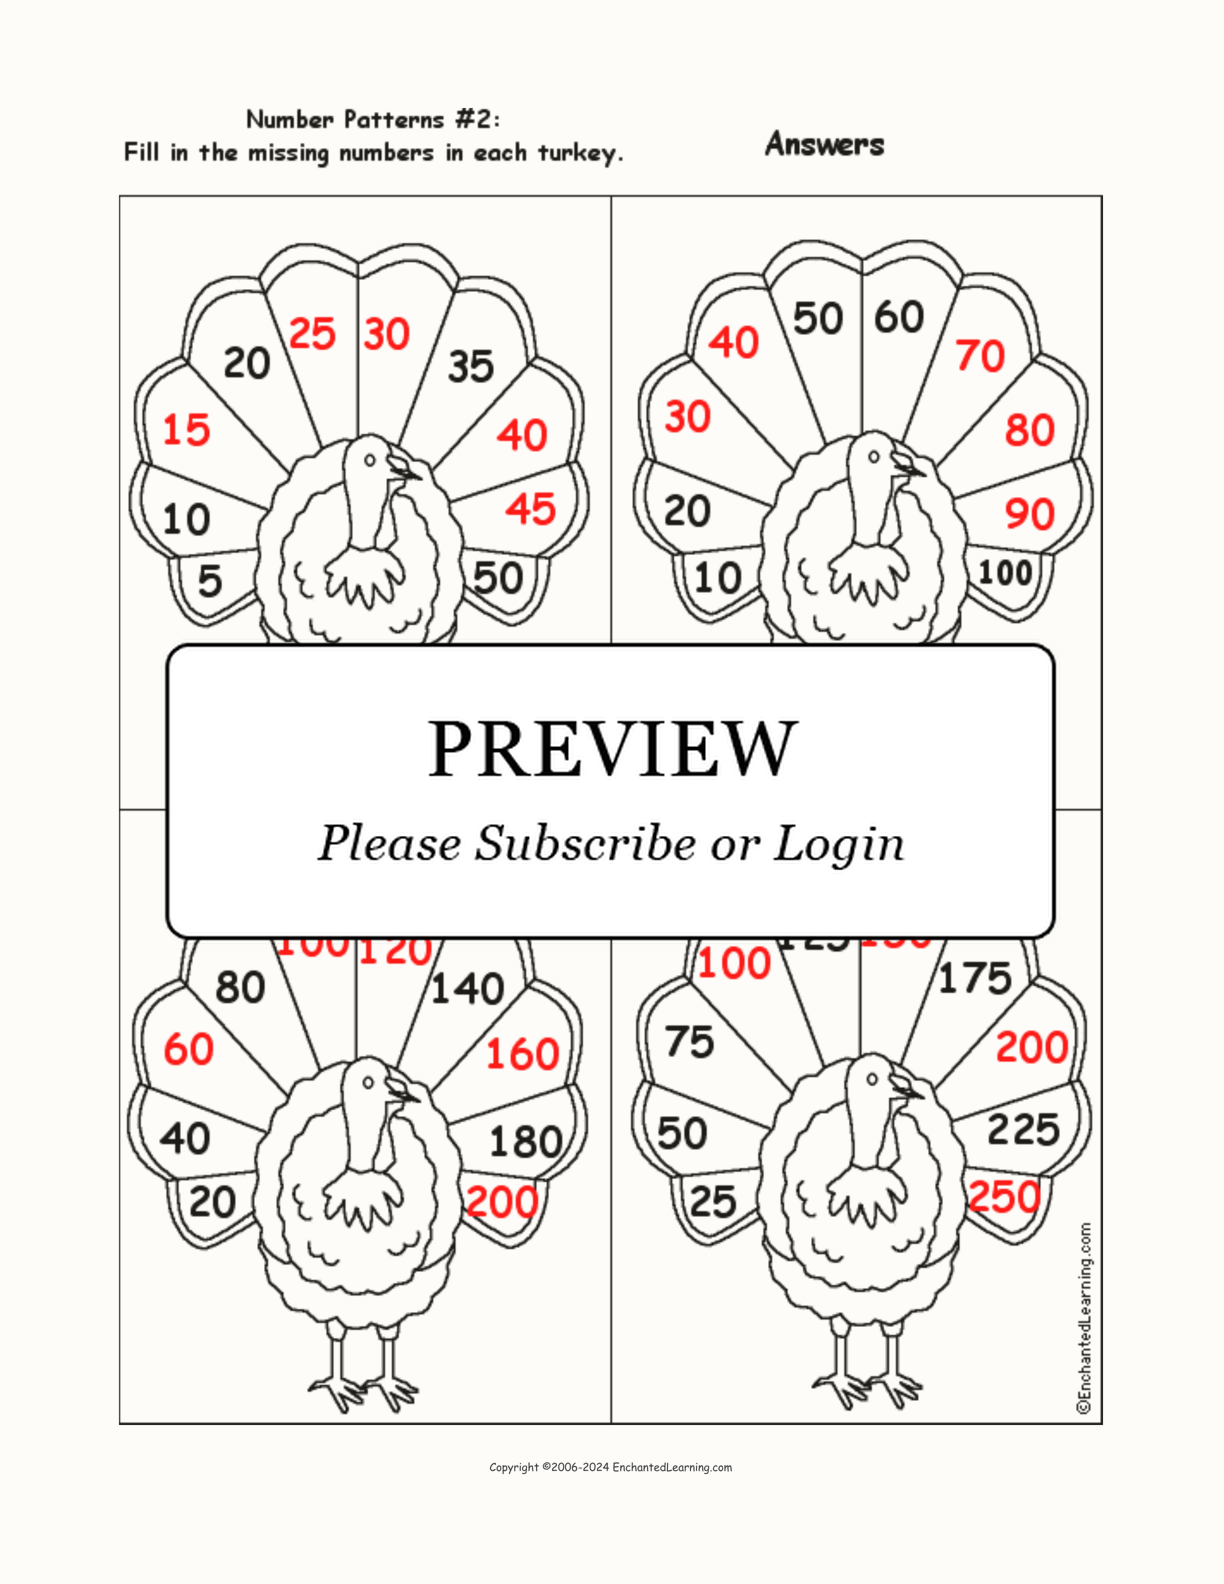 Turkey Number Patterns #2 interactive worksheet page 2